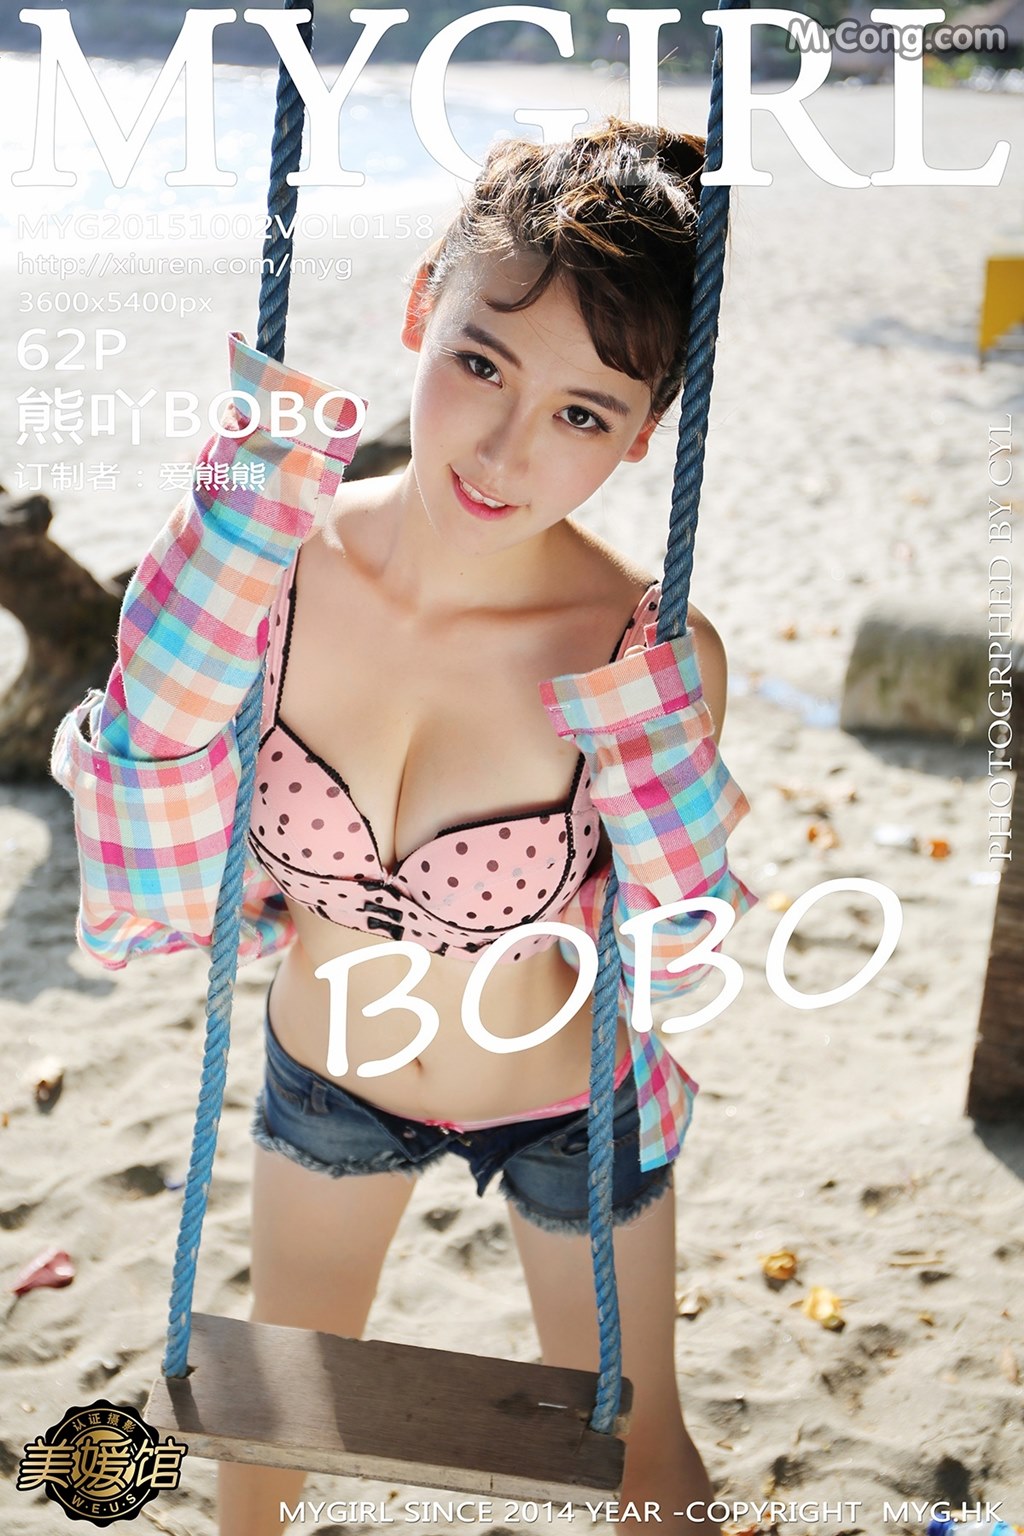 MyGirl Vol.158: BOBO Model (熊 吖) (63 photos)